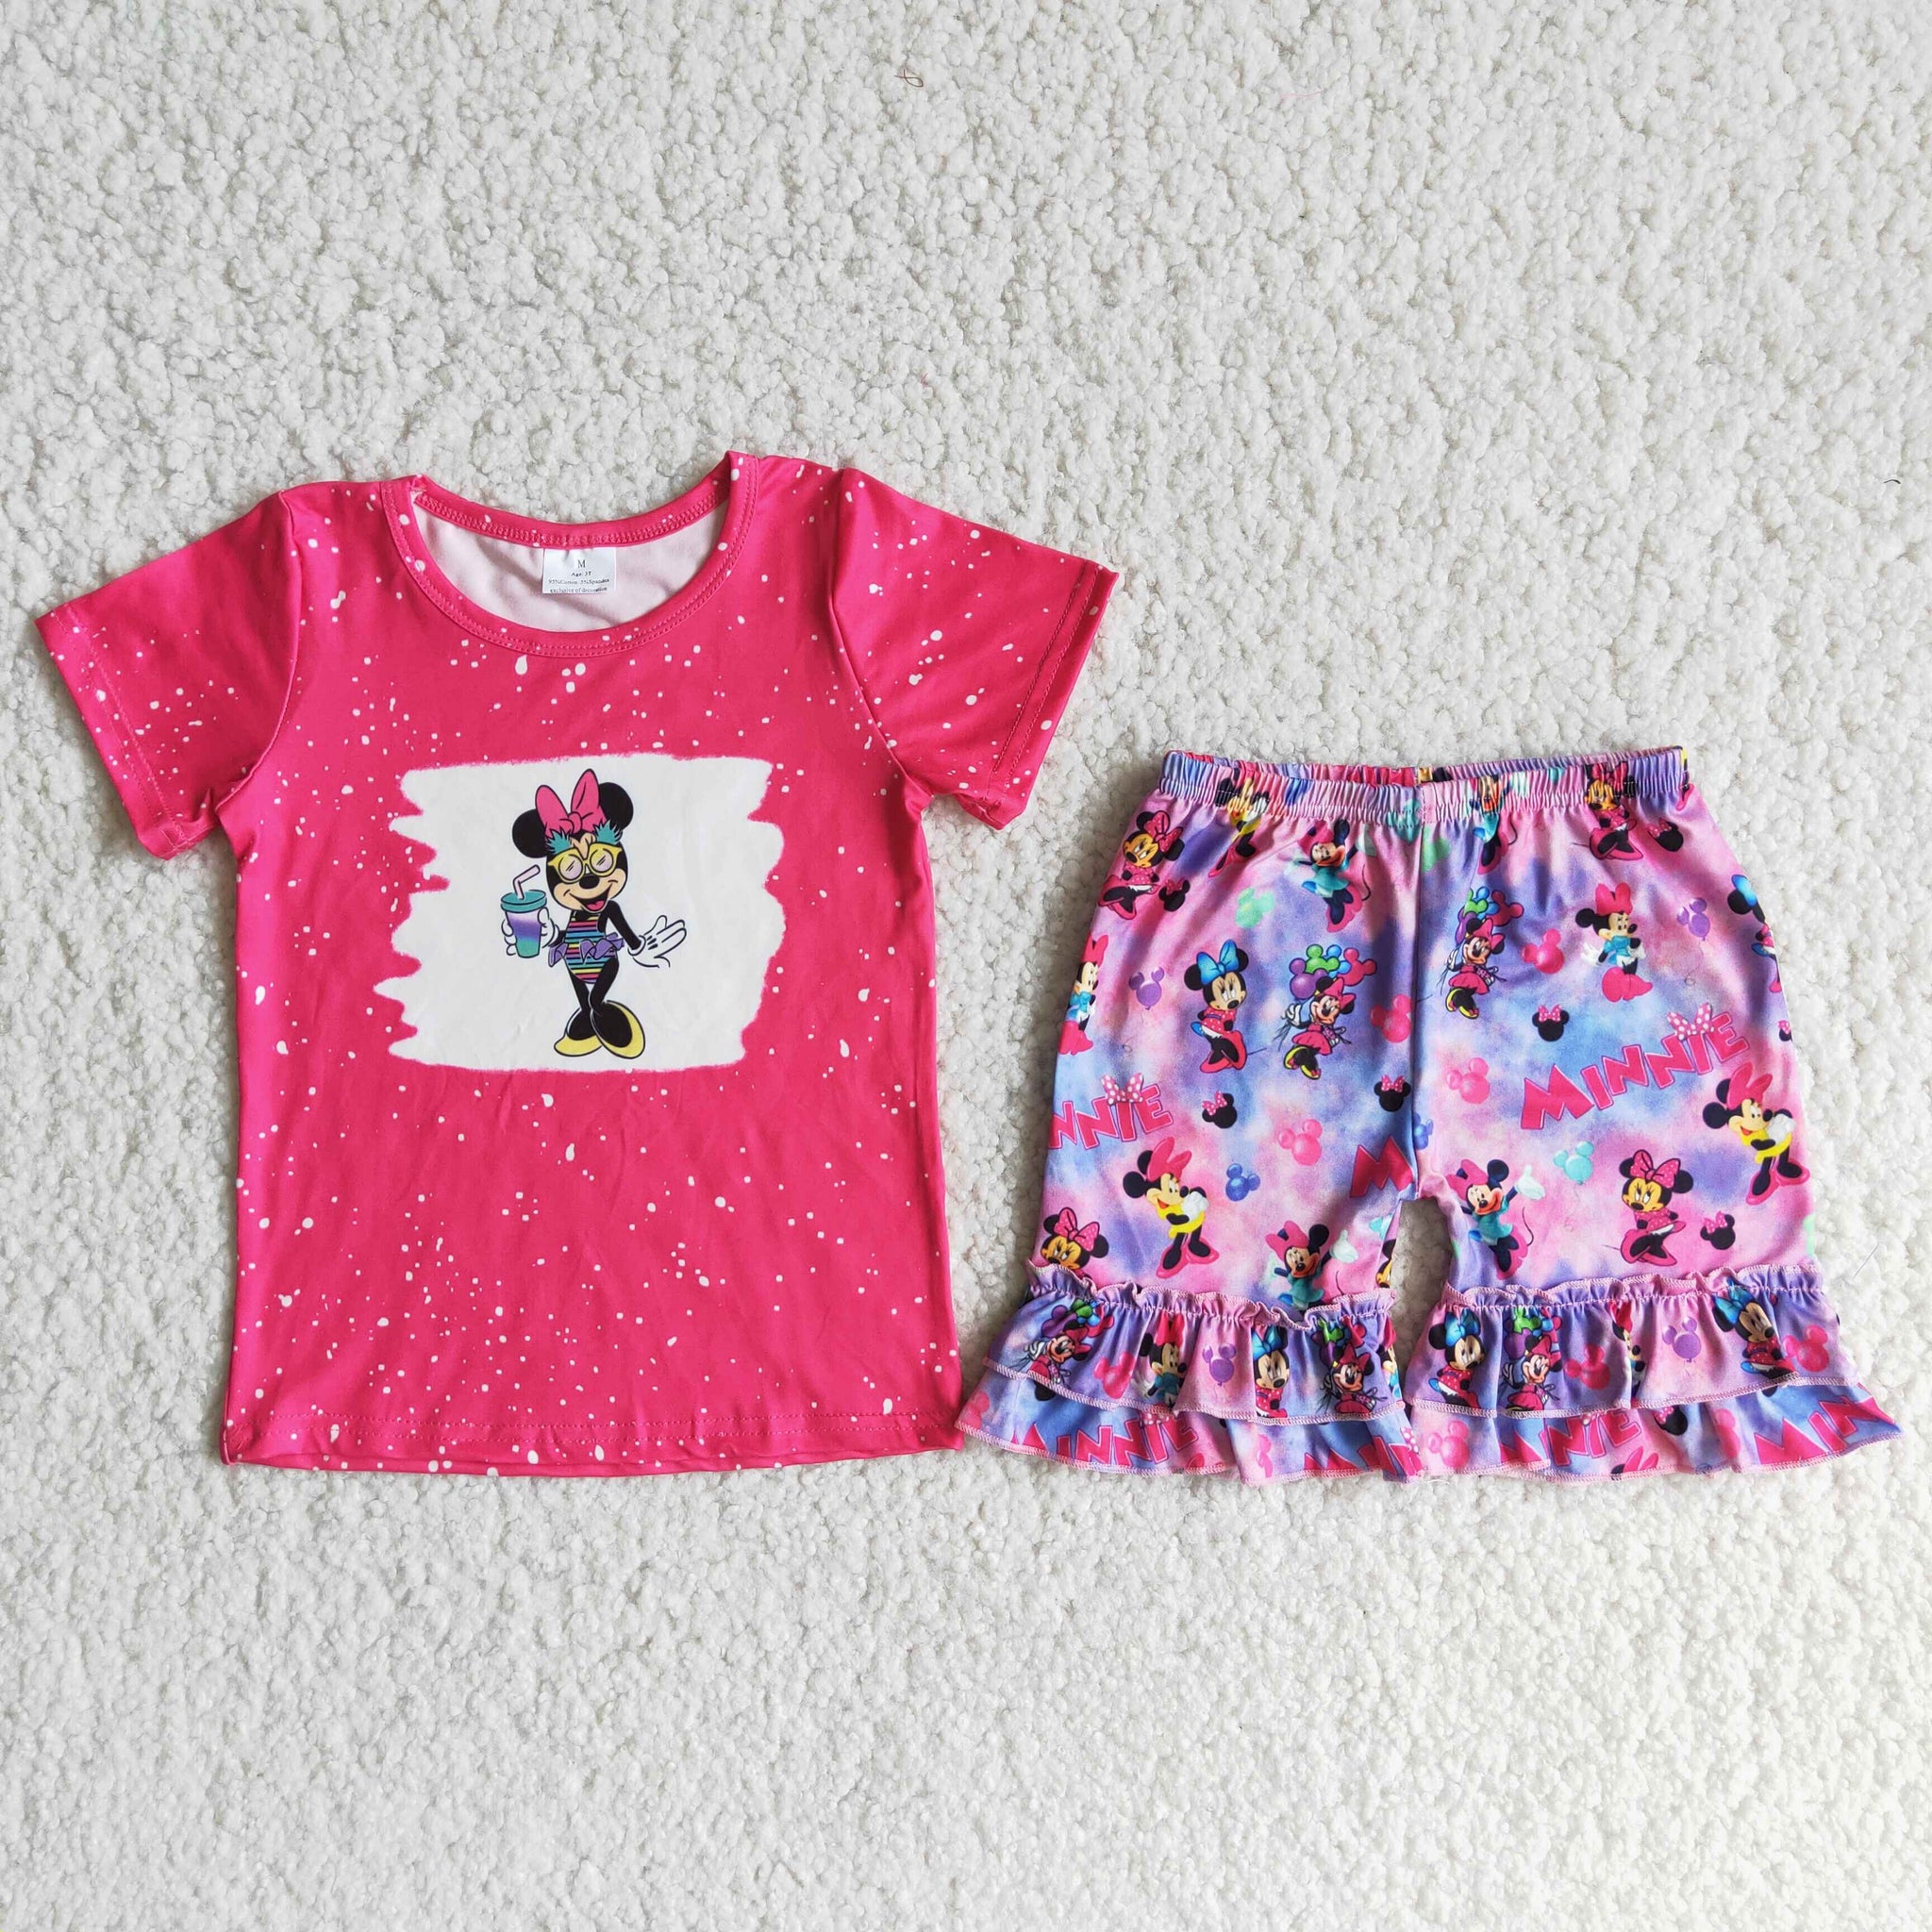 D12-28 baby girl clothes cartoon hot pink summer shorts set